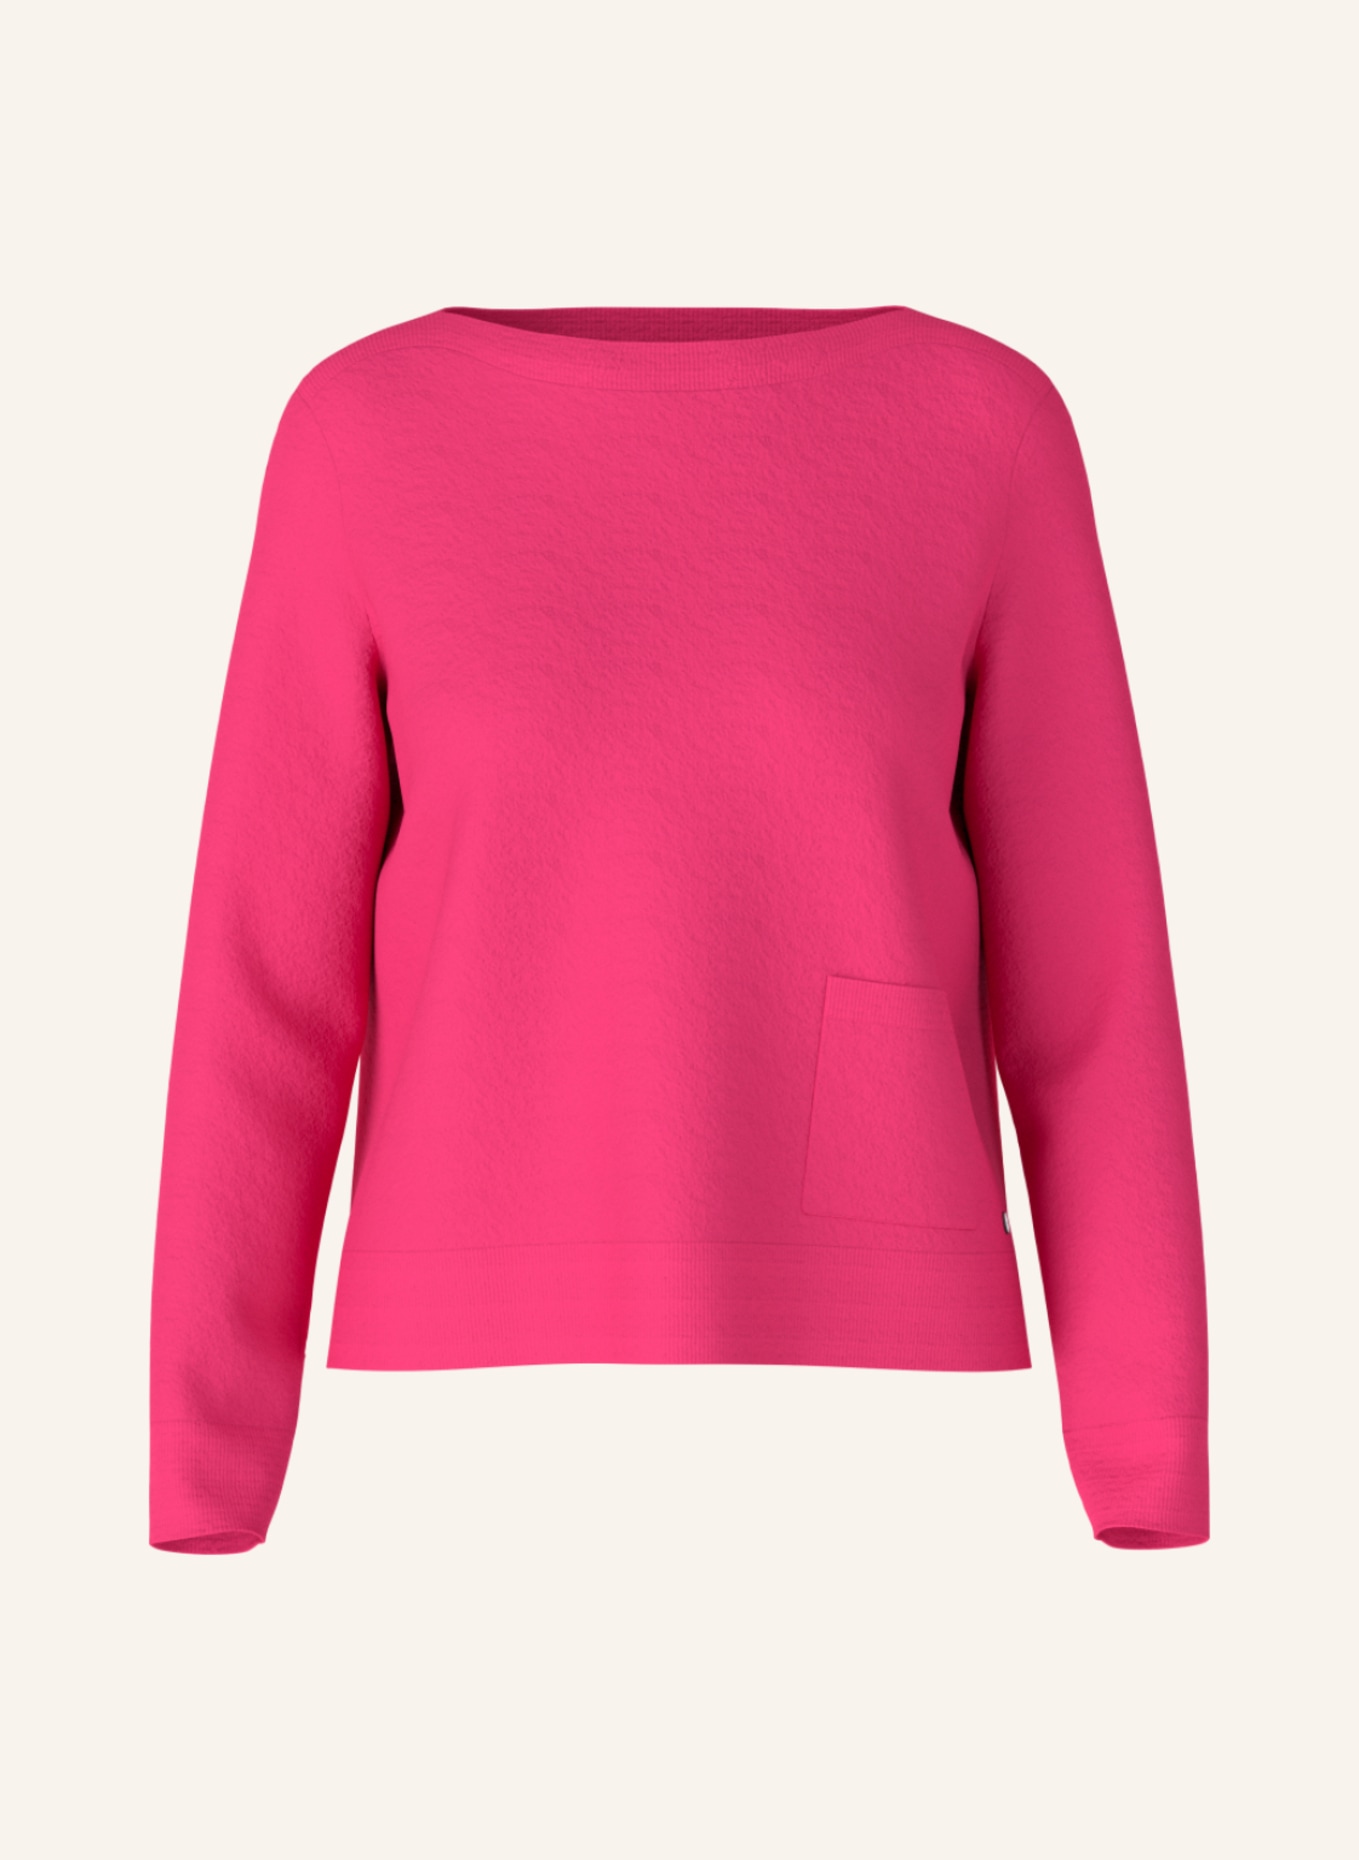 MARC CAIN Pullover, Farbe: PINK (Bild 1)